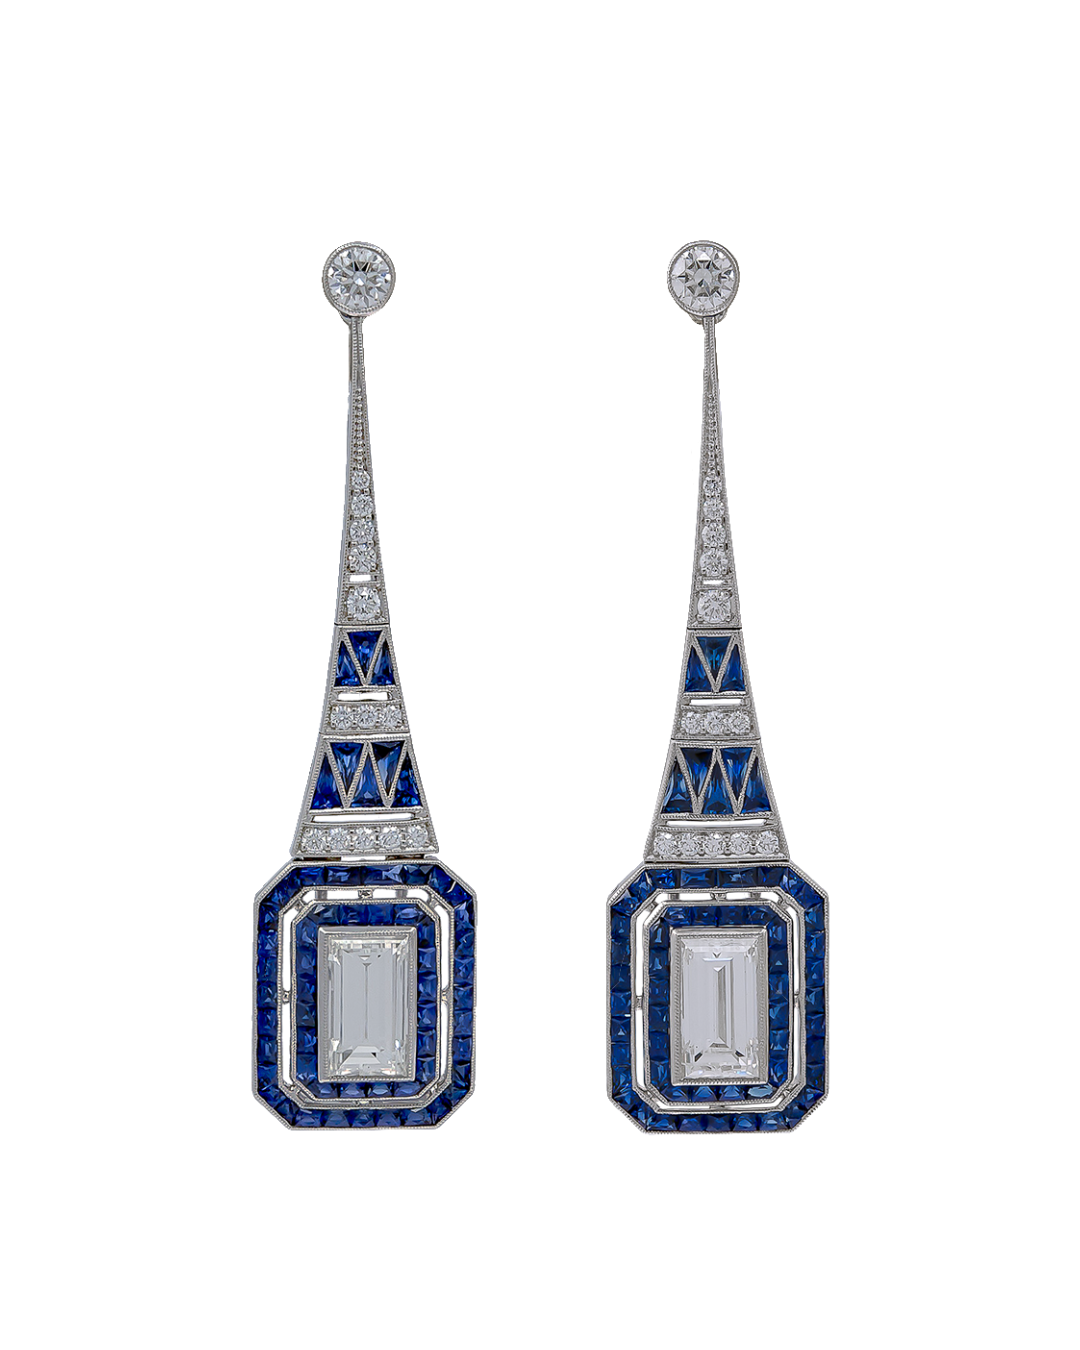 Sophia D. Art Deco Transitional Earrings in Blue Sapphire and Diamond